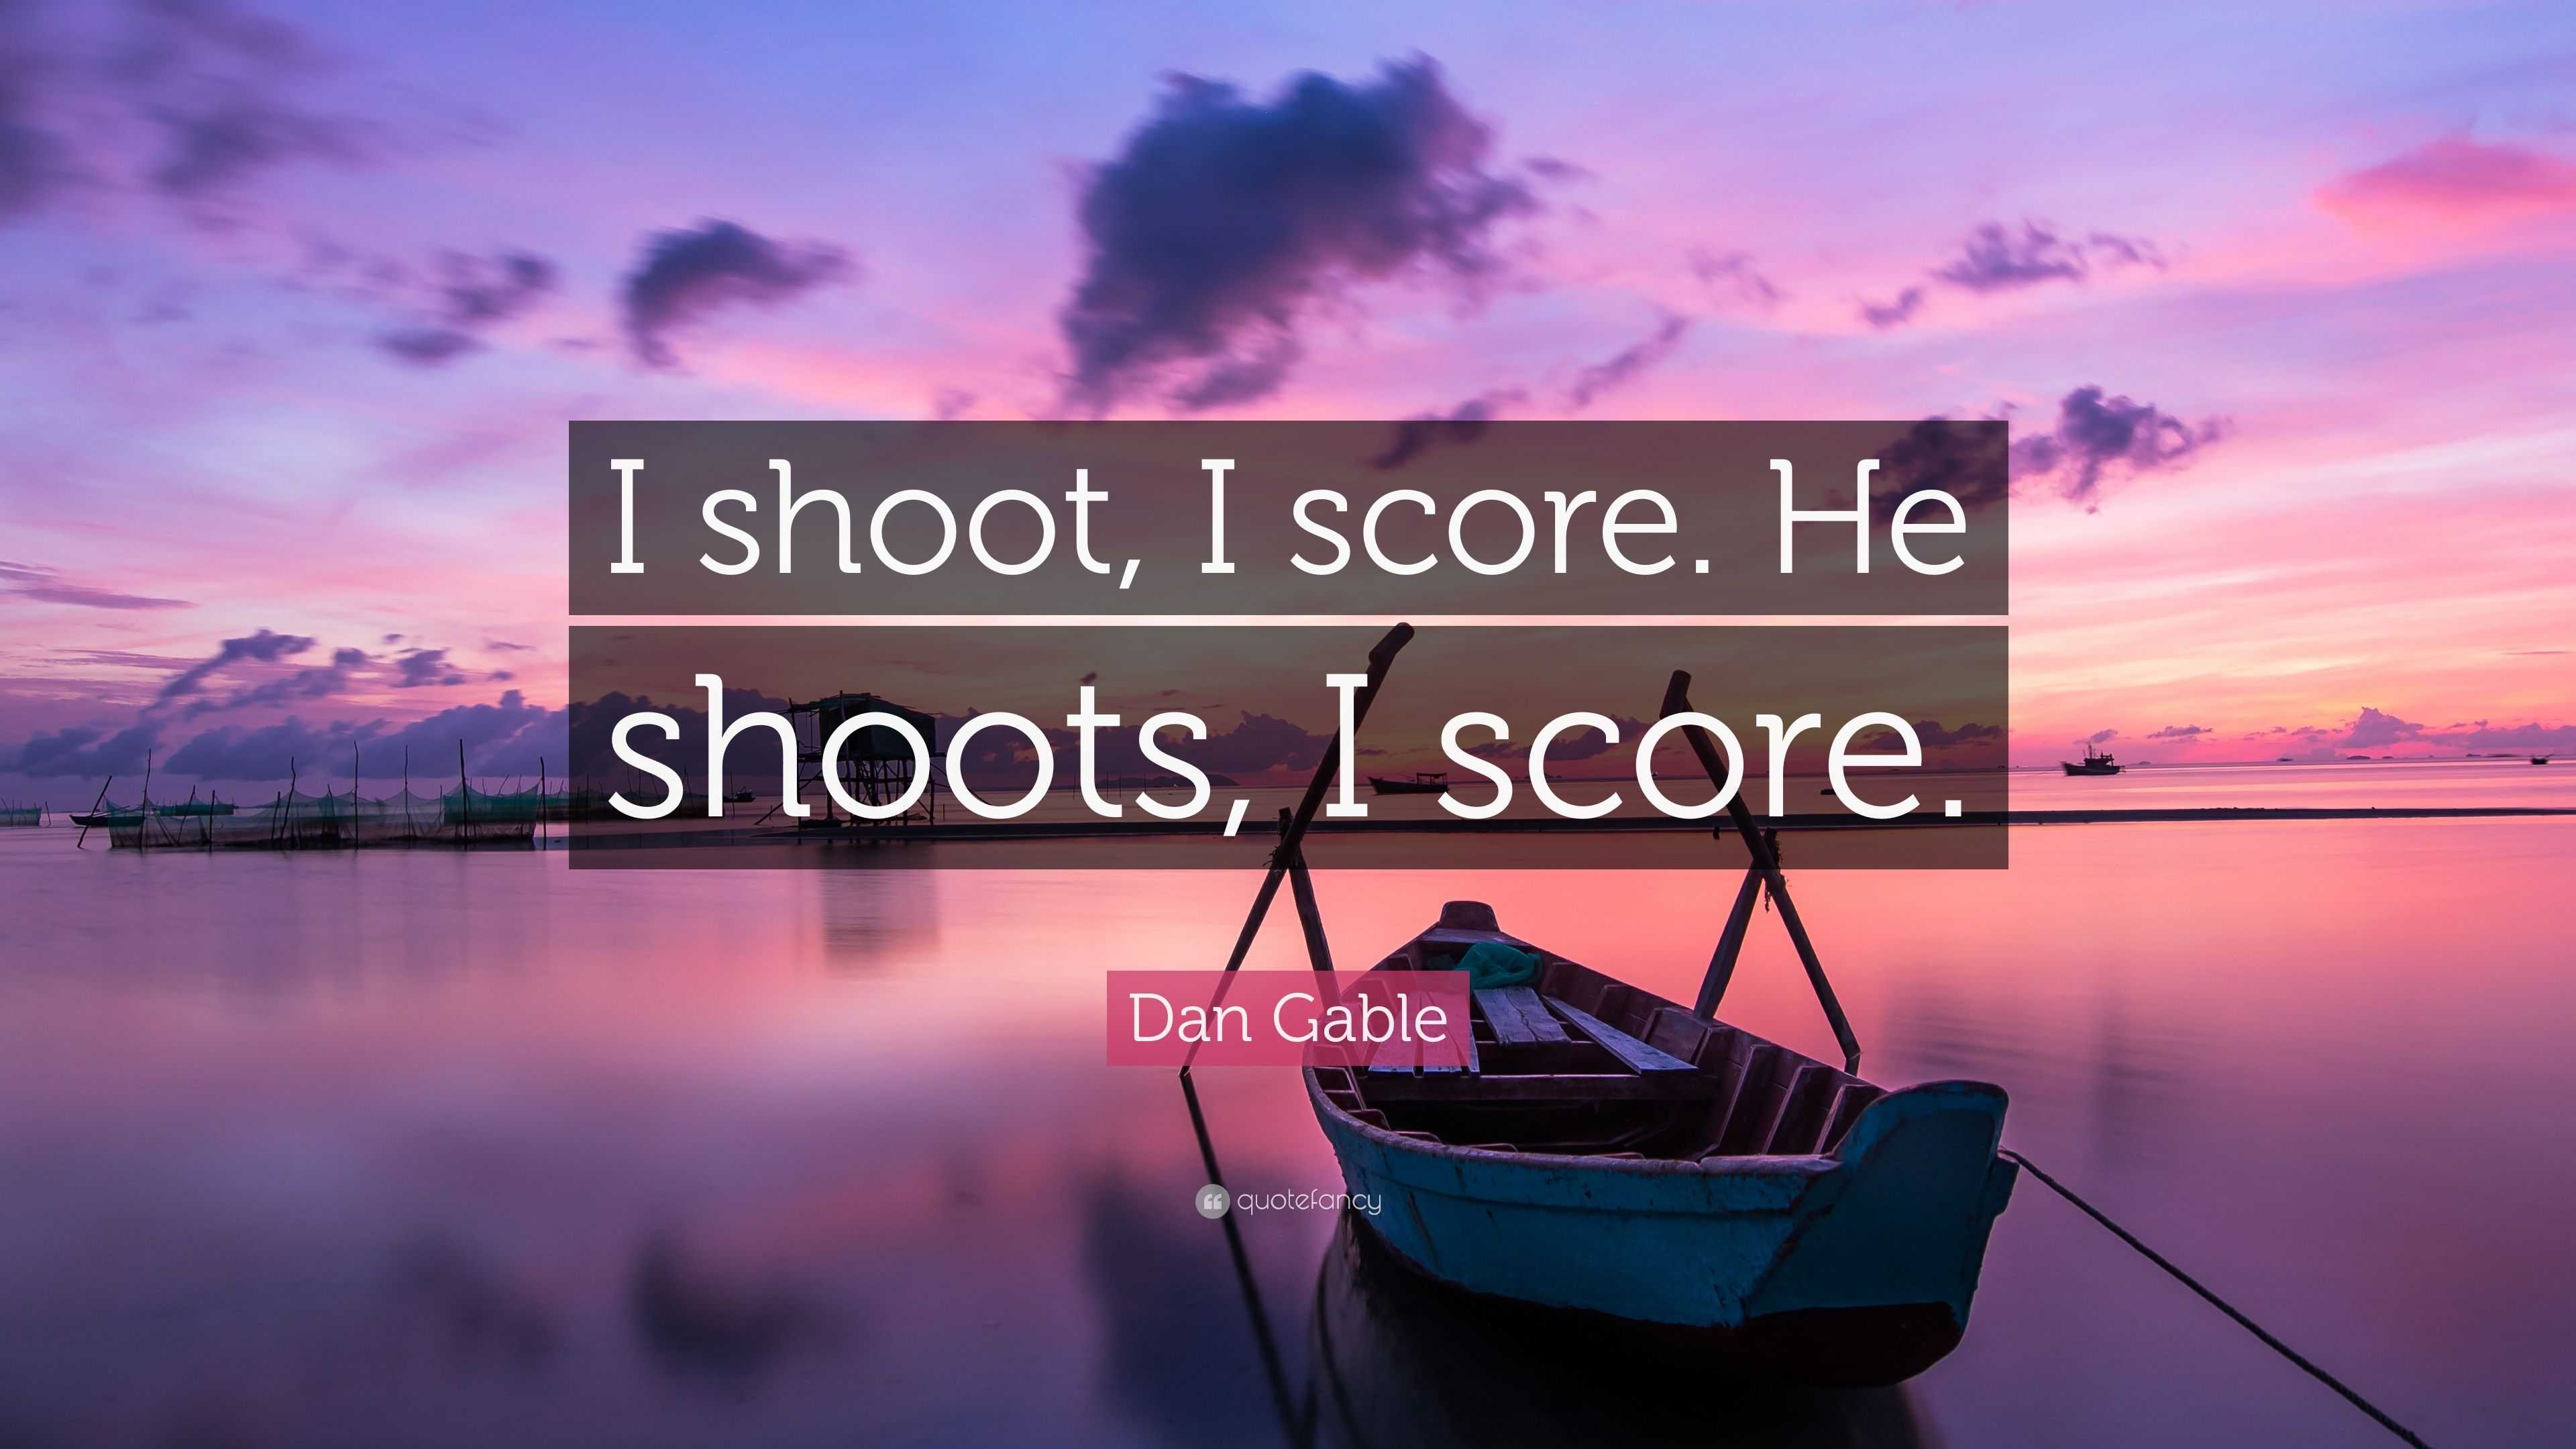 Dan Gable Quote: "I shoot, I score. He shoots, I score ...